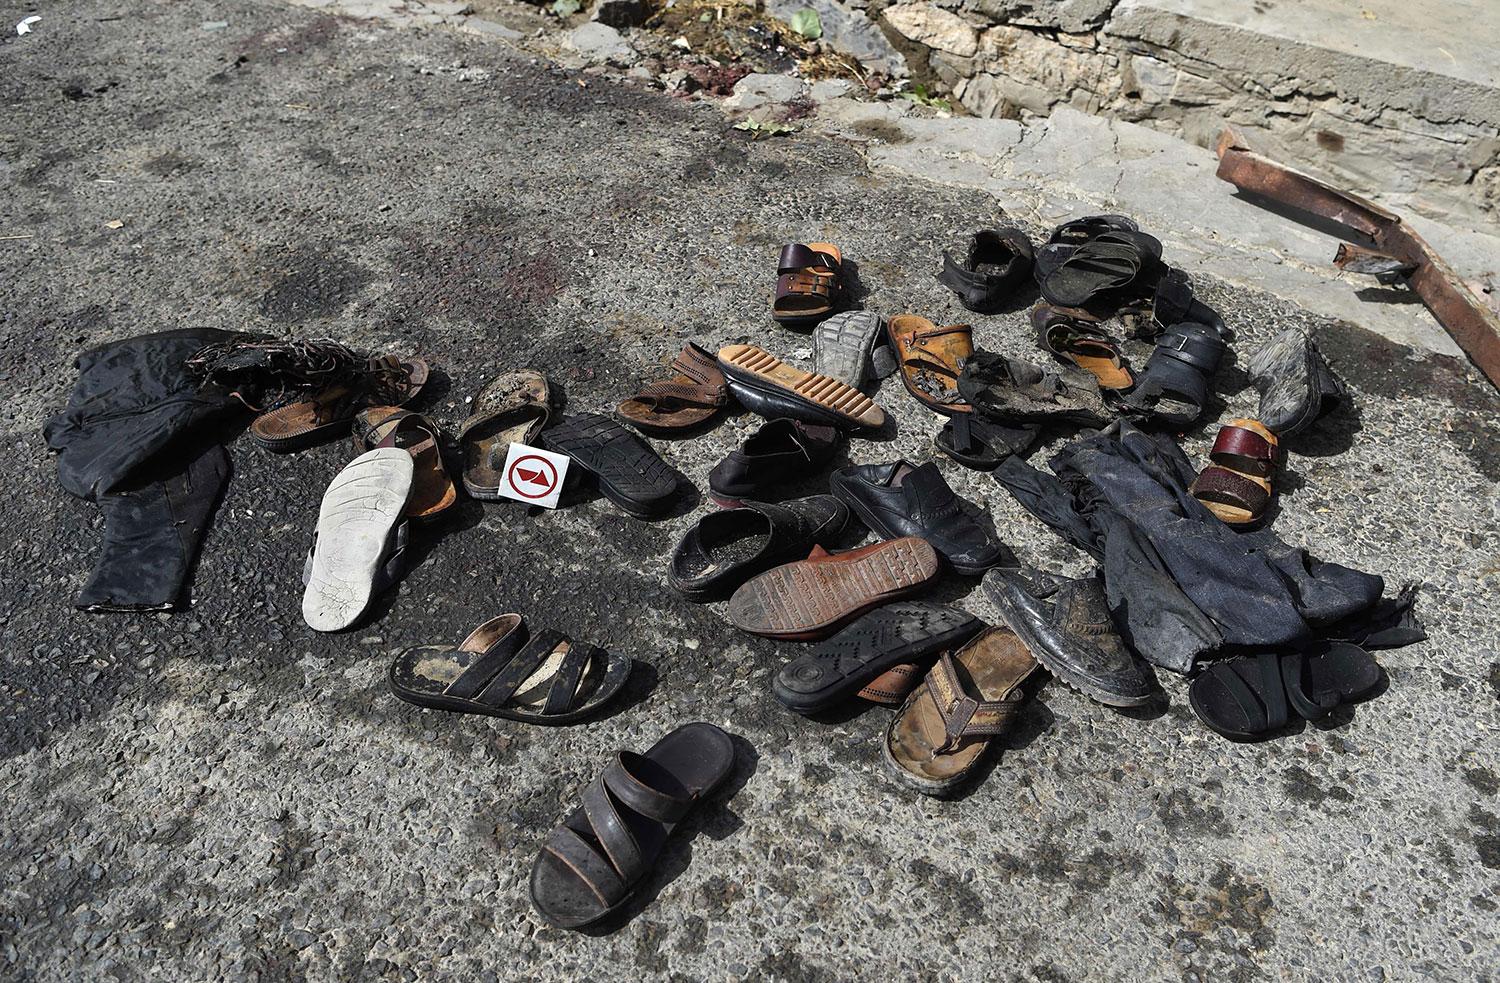 Sandaler på marken efter en självmordsattack i Kabul den 6 september. Minst 20 personer dödades.